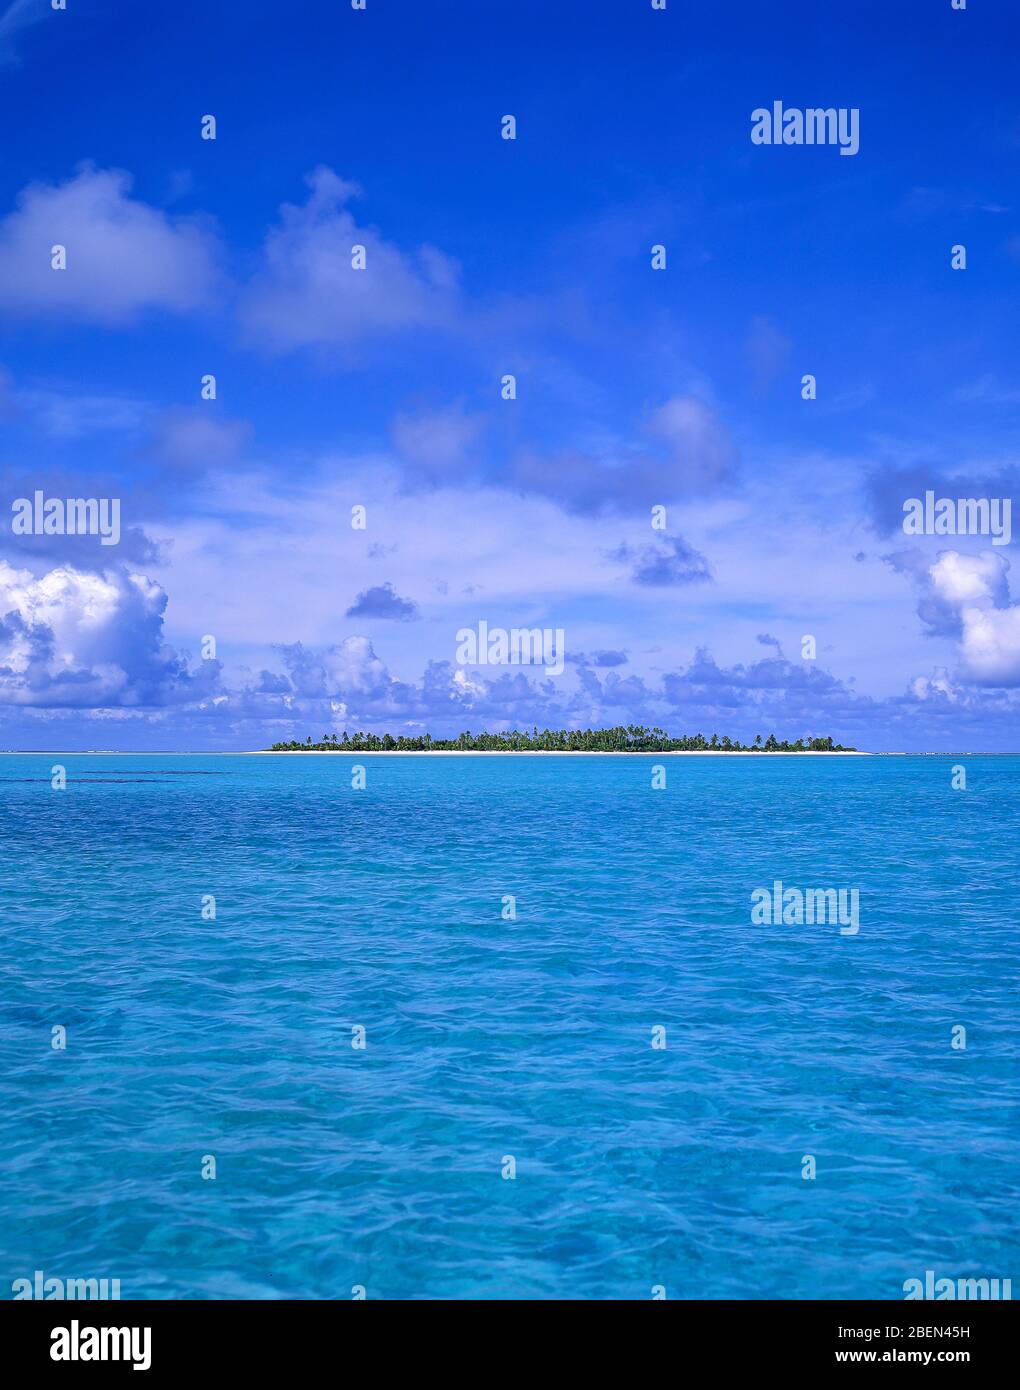 Tropical Island from the sea, Aitutaki Atoll, Cook Islands Stock Photo